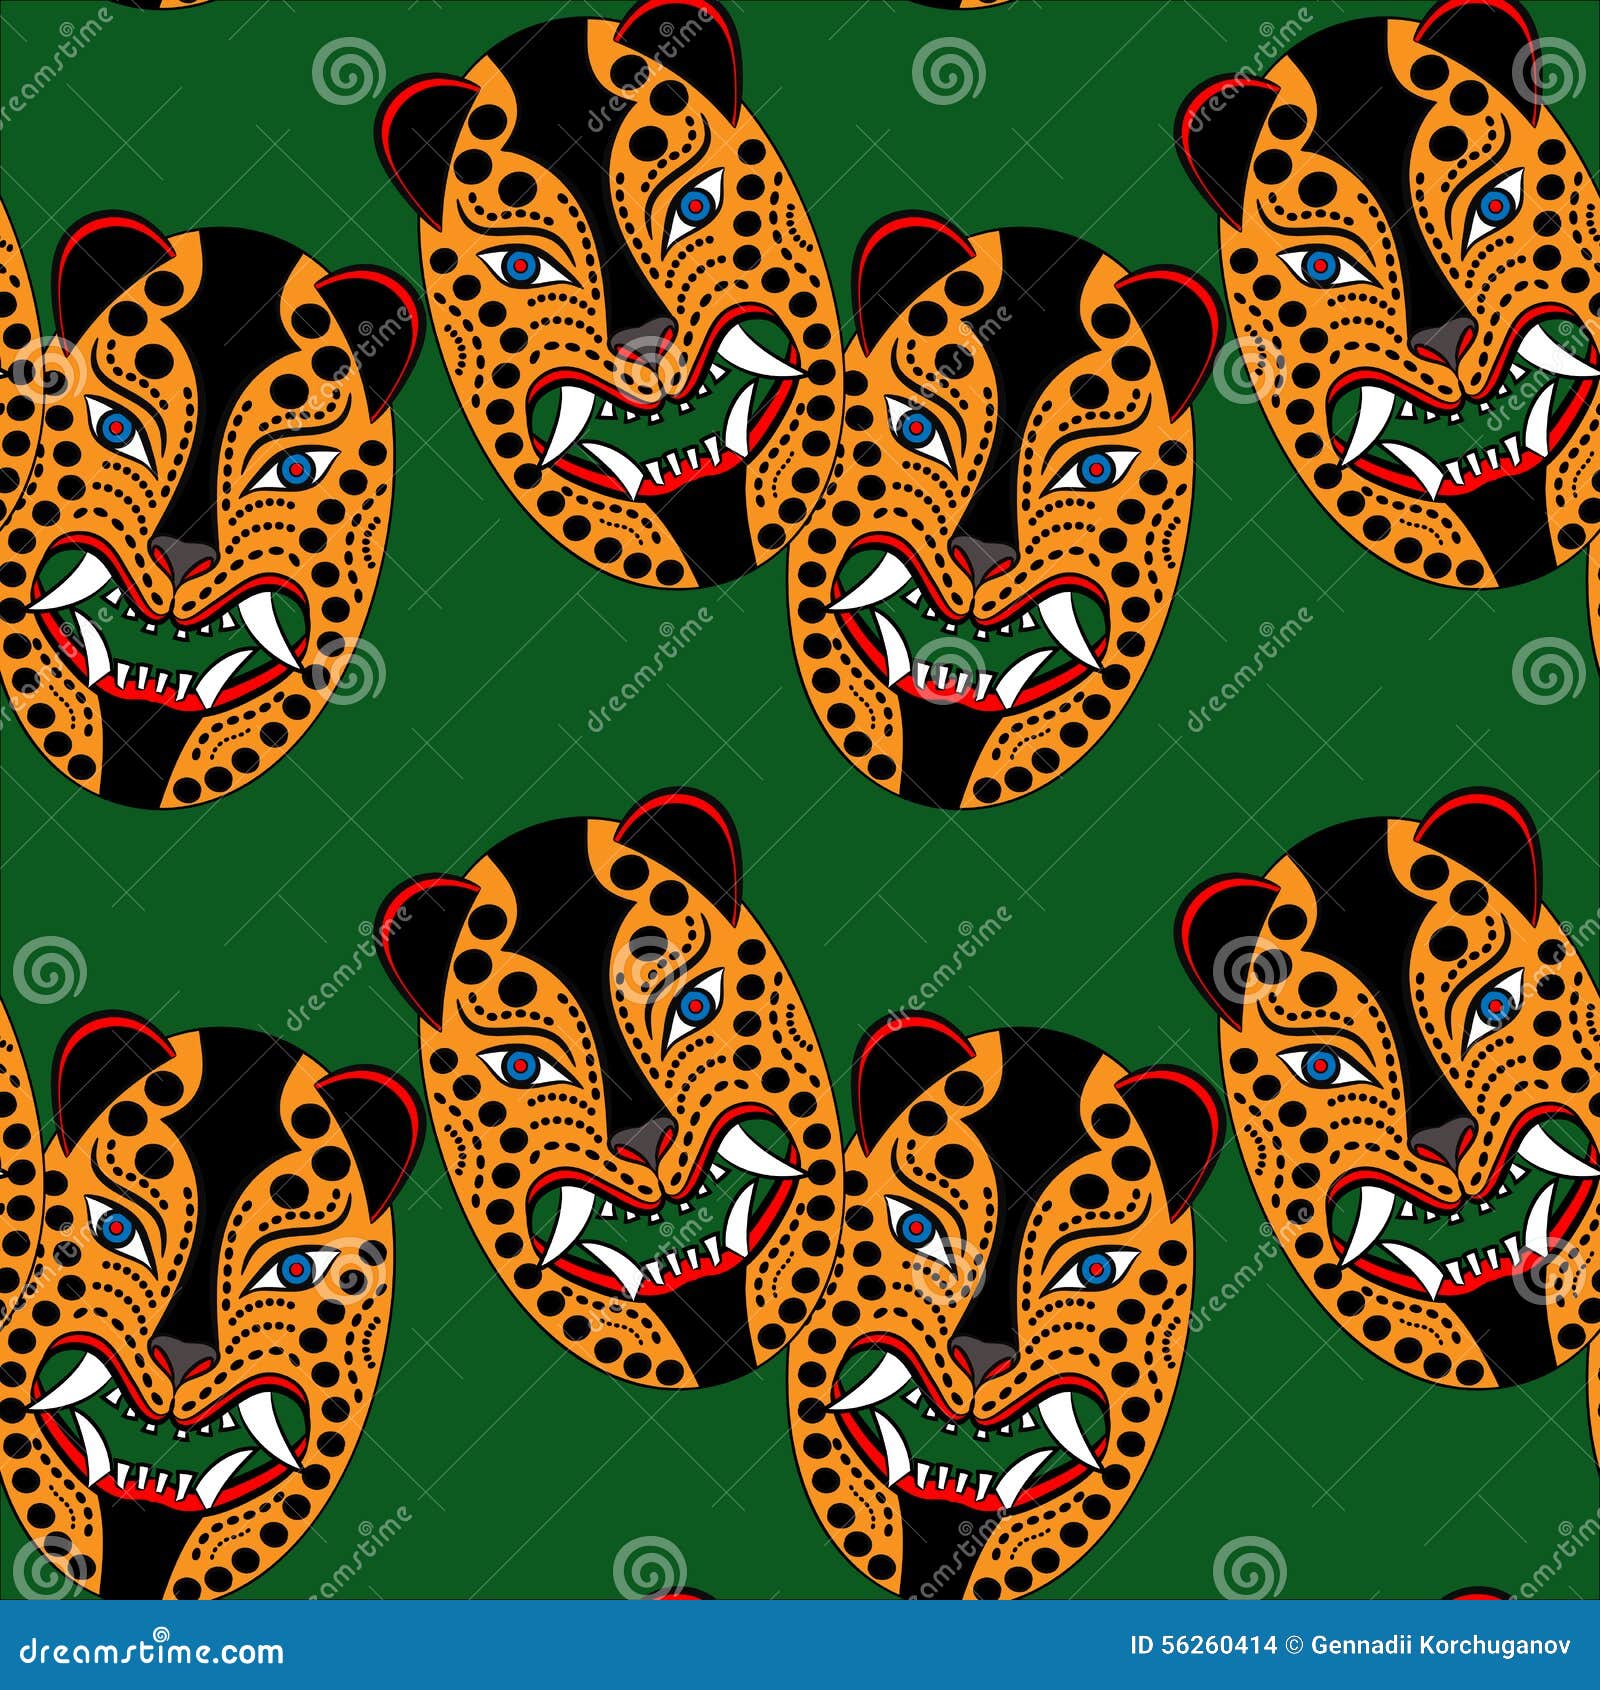 mask jaguar pattern of the aztecs of